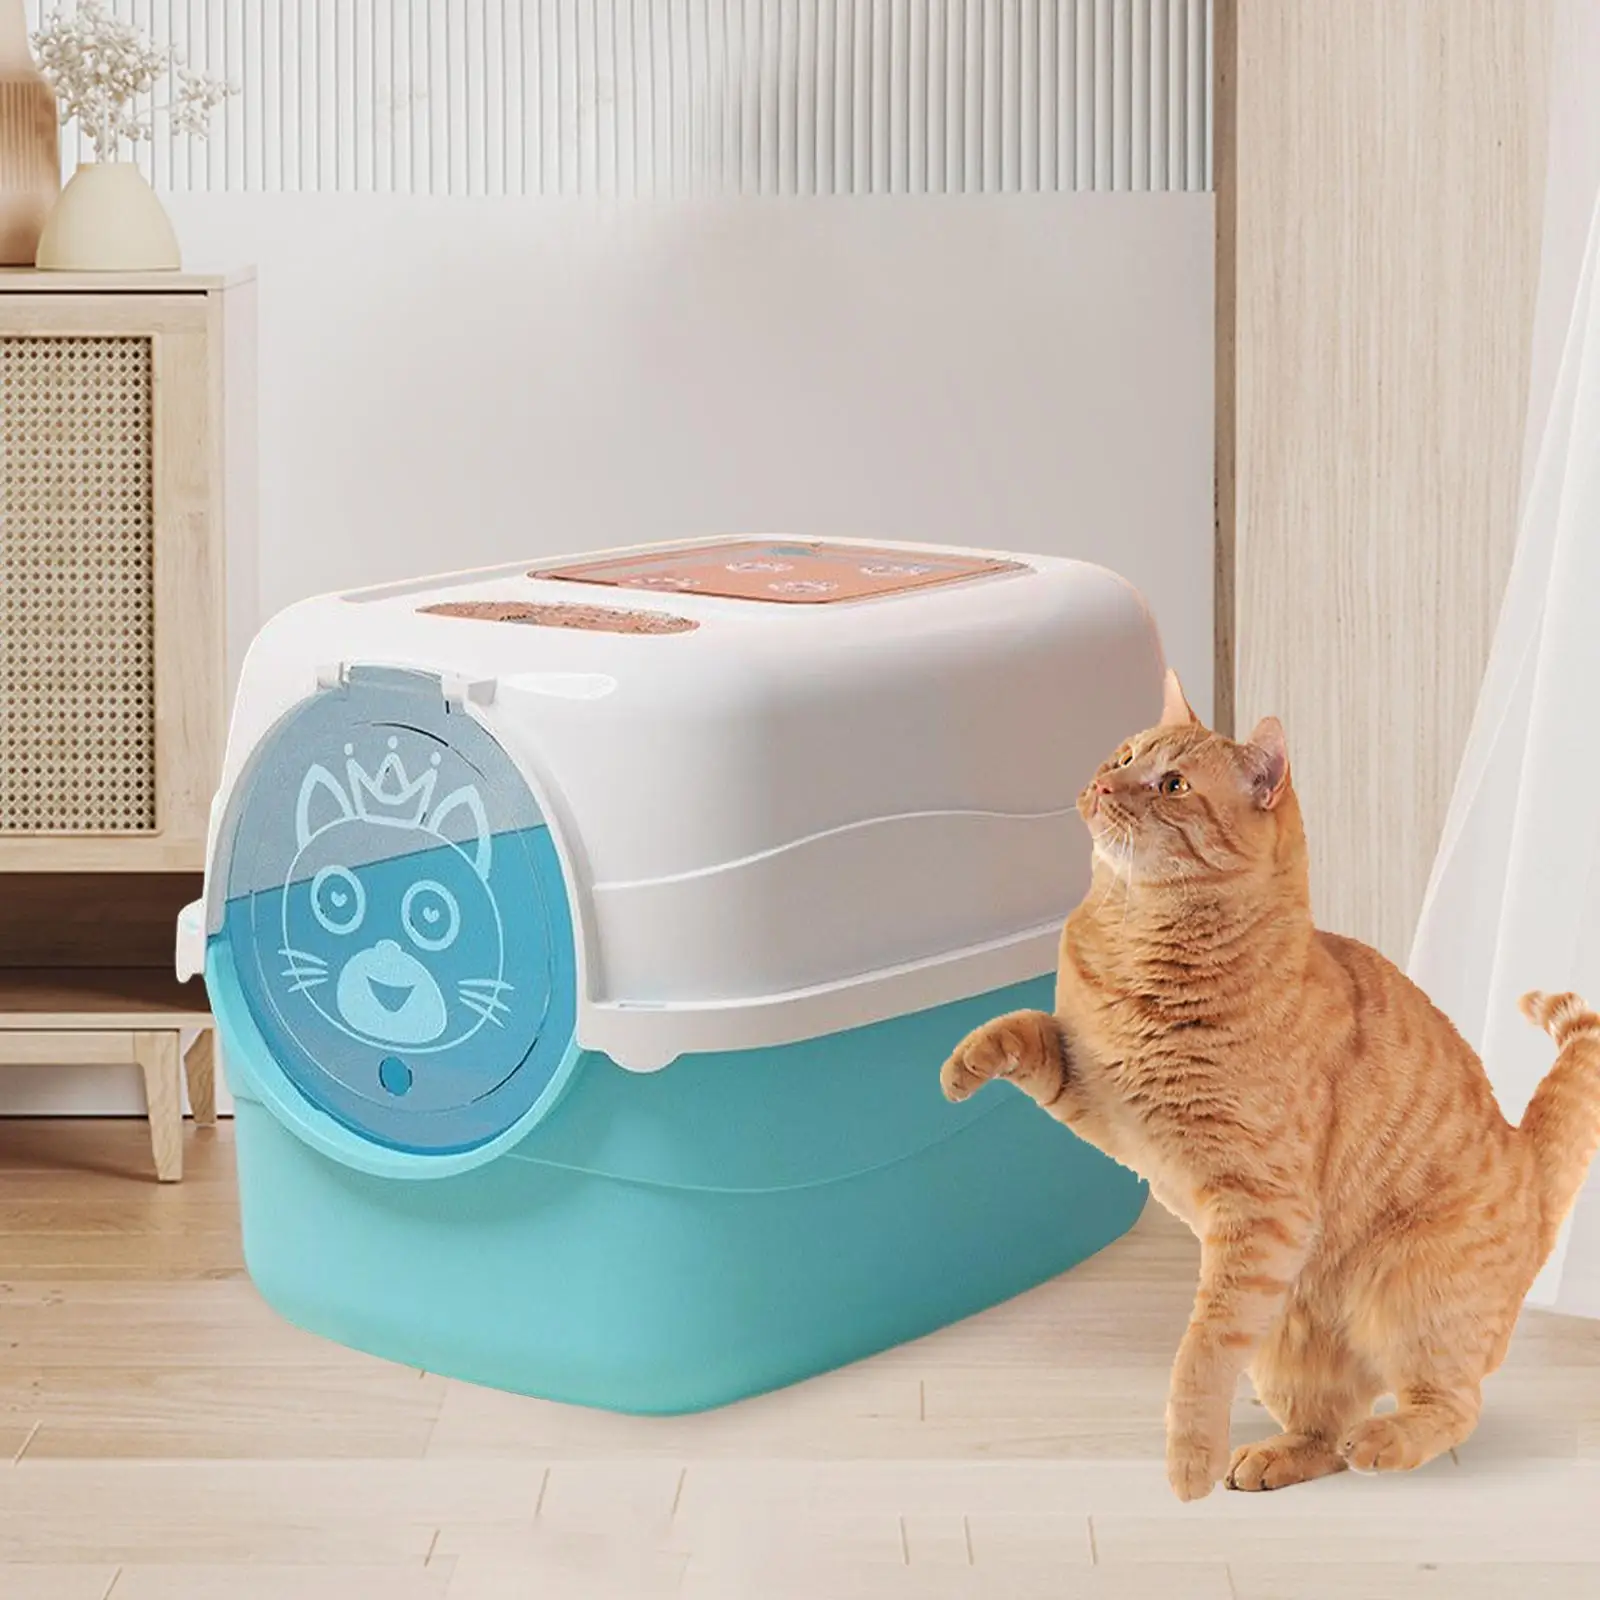 Hooded Cat Litter Box Enclosed Cat Toilet Detachable Cat Litter Tray Easy Tidy with Door Reusable Pet Litter Box Pet Supplies